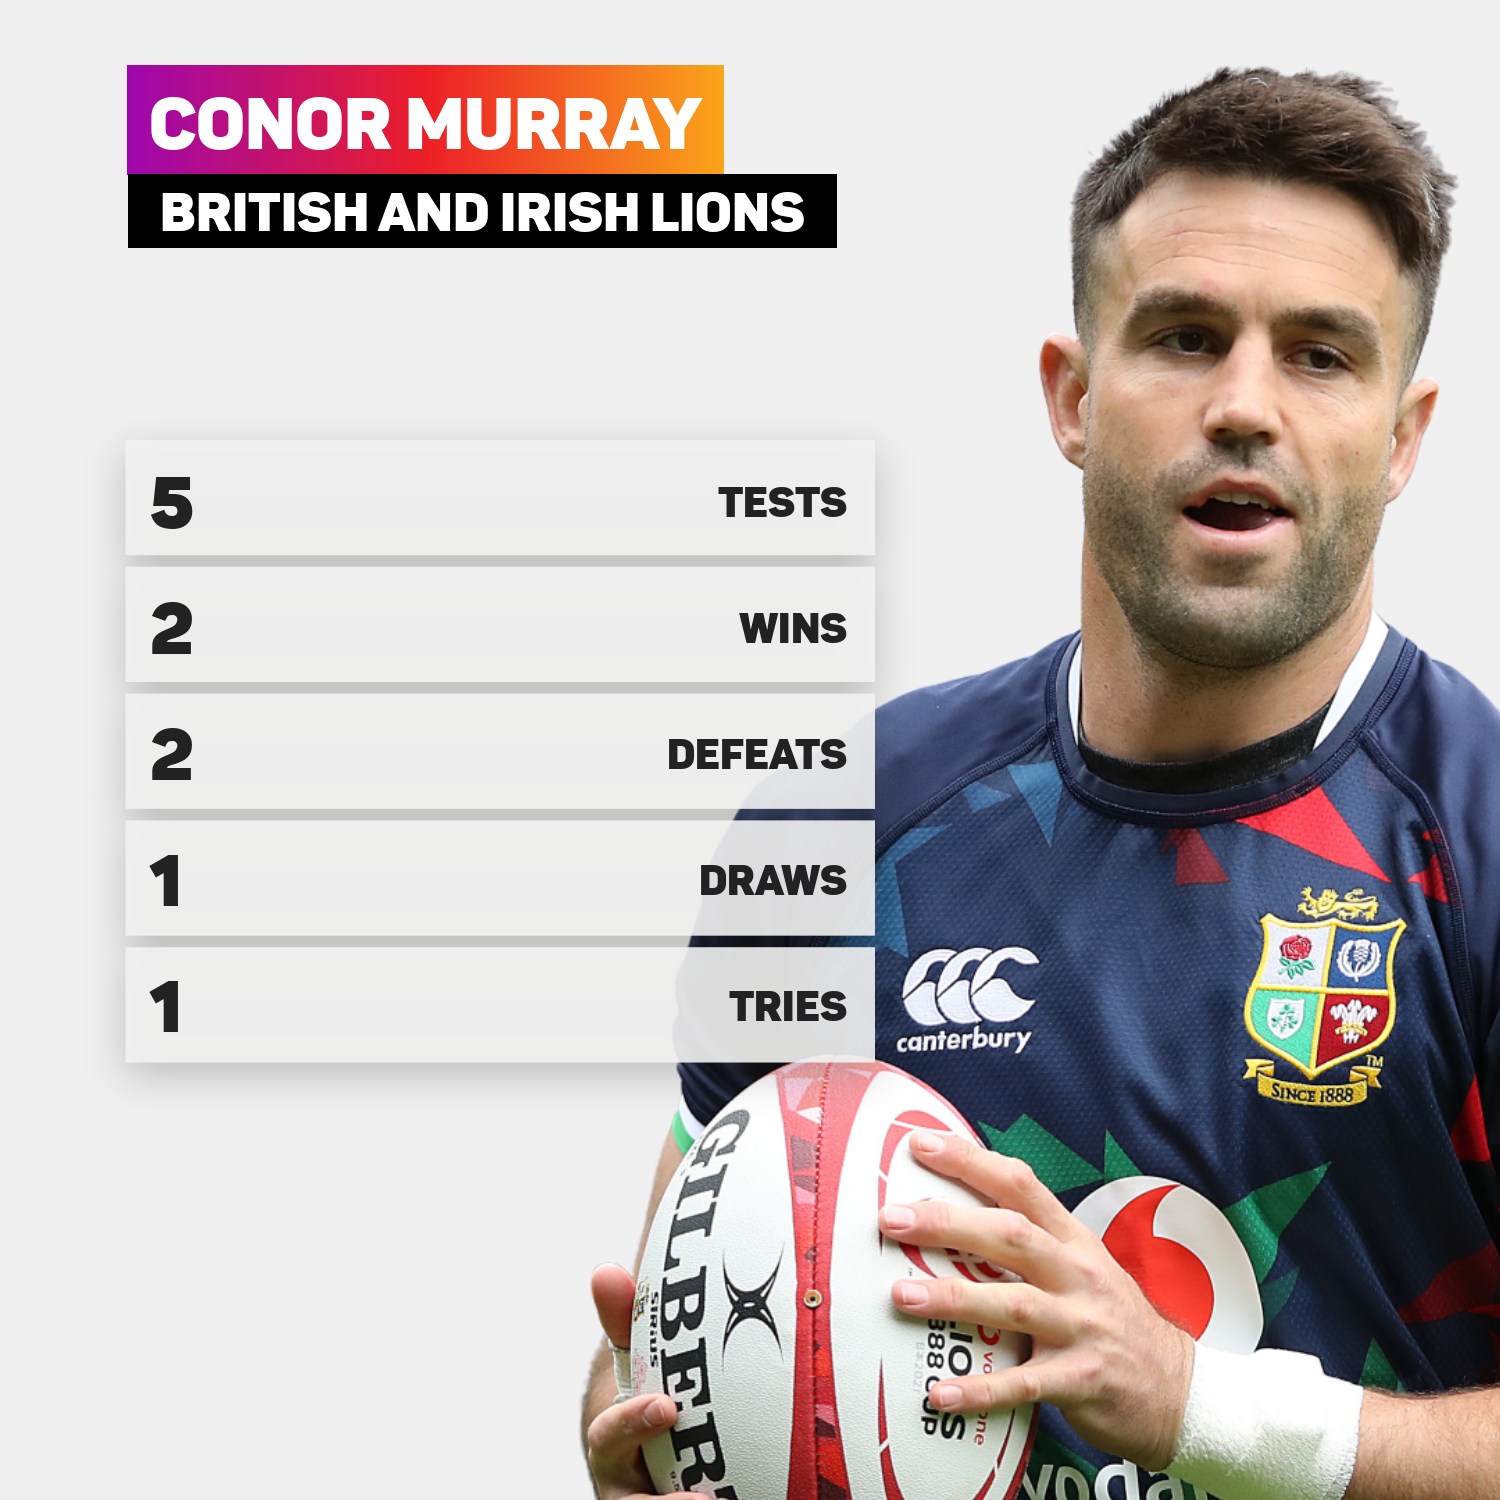 Conor Murray's British and Irish Lions record